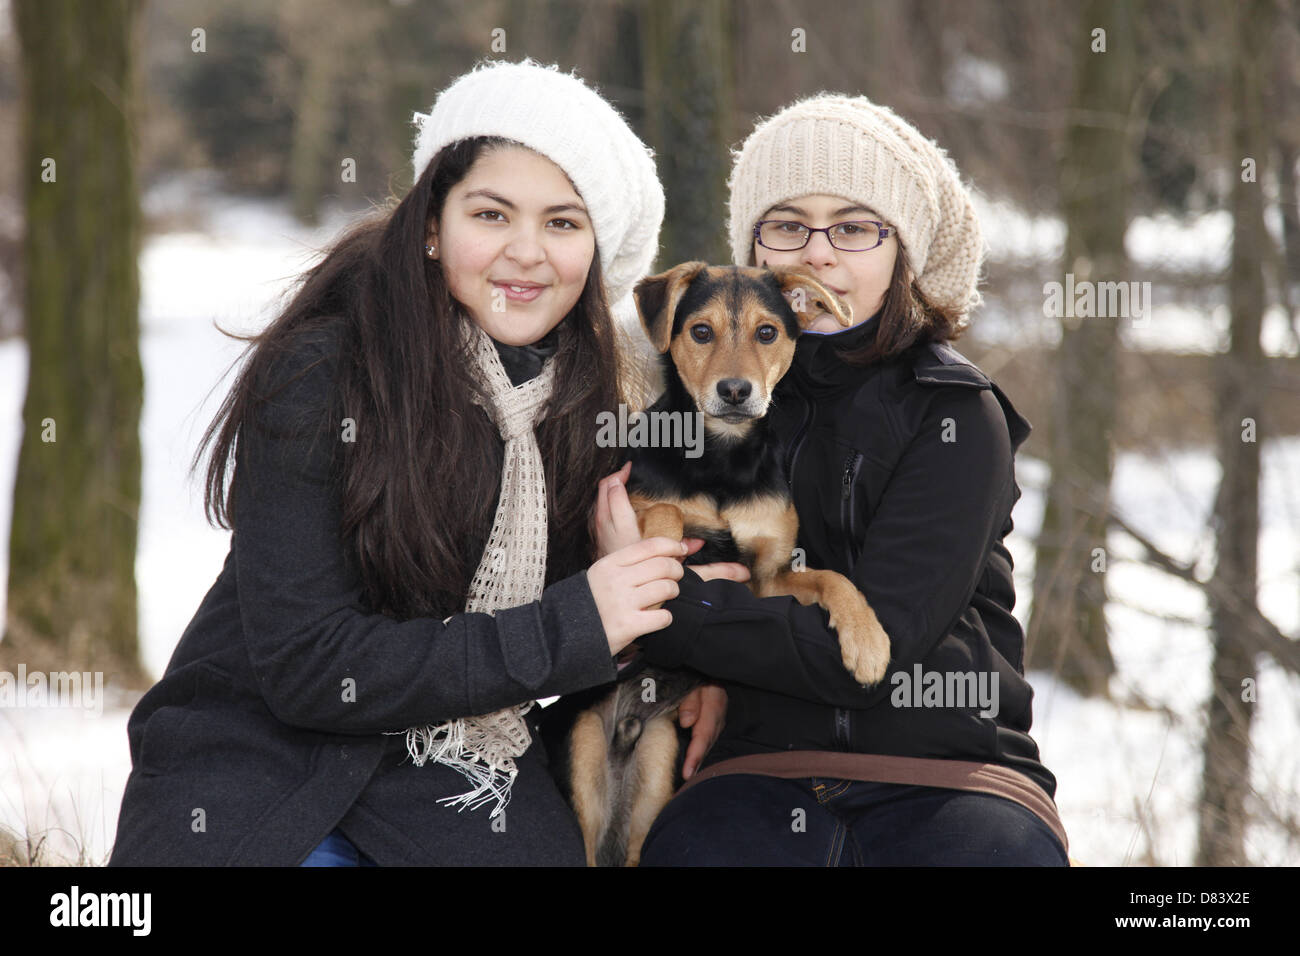 kids with dog Stock Photo